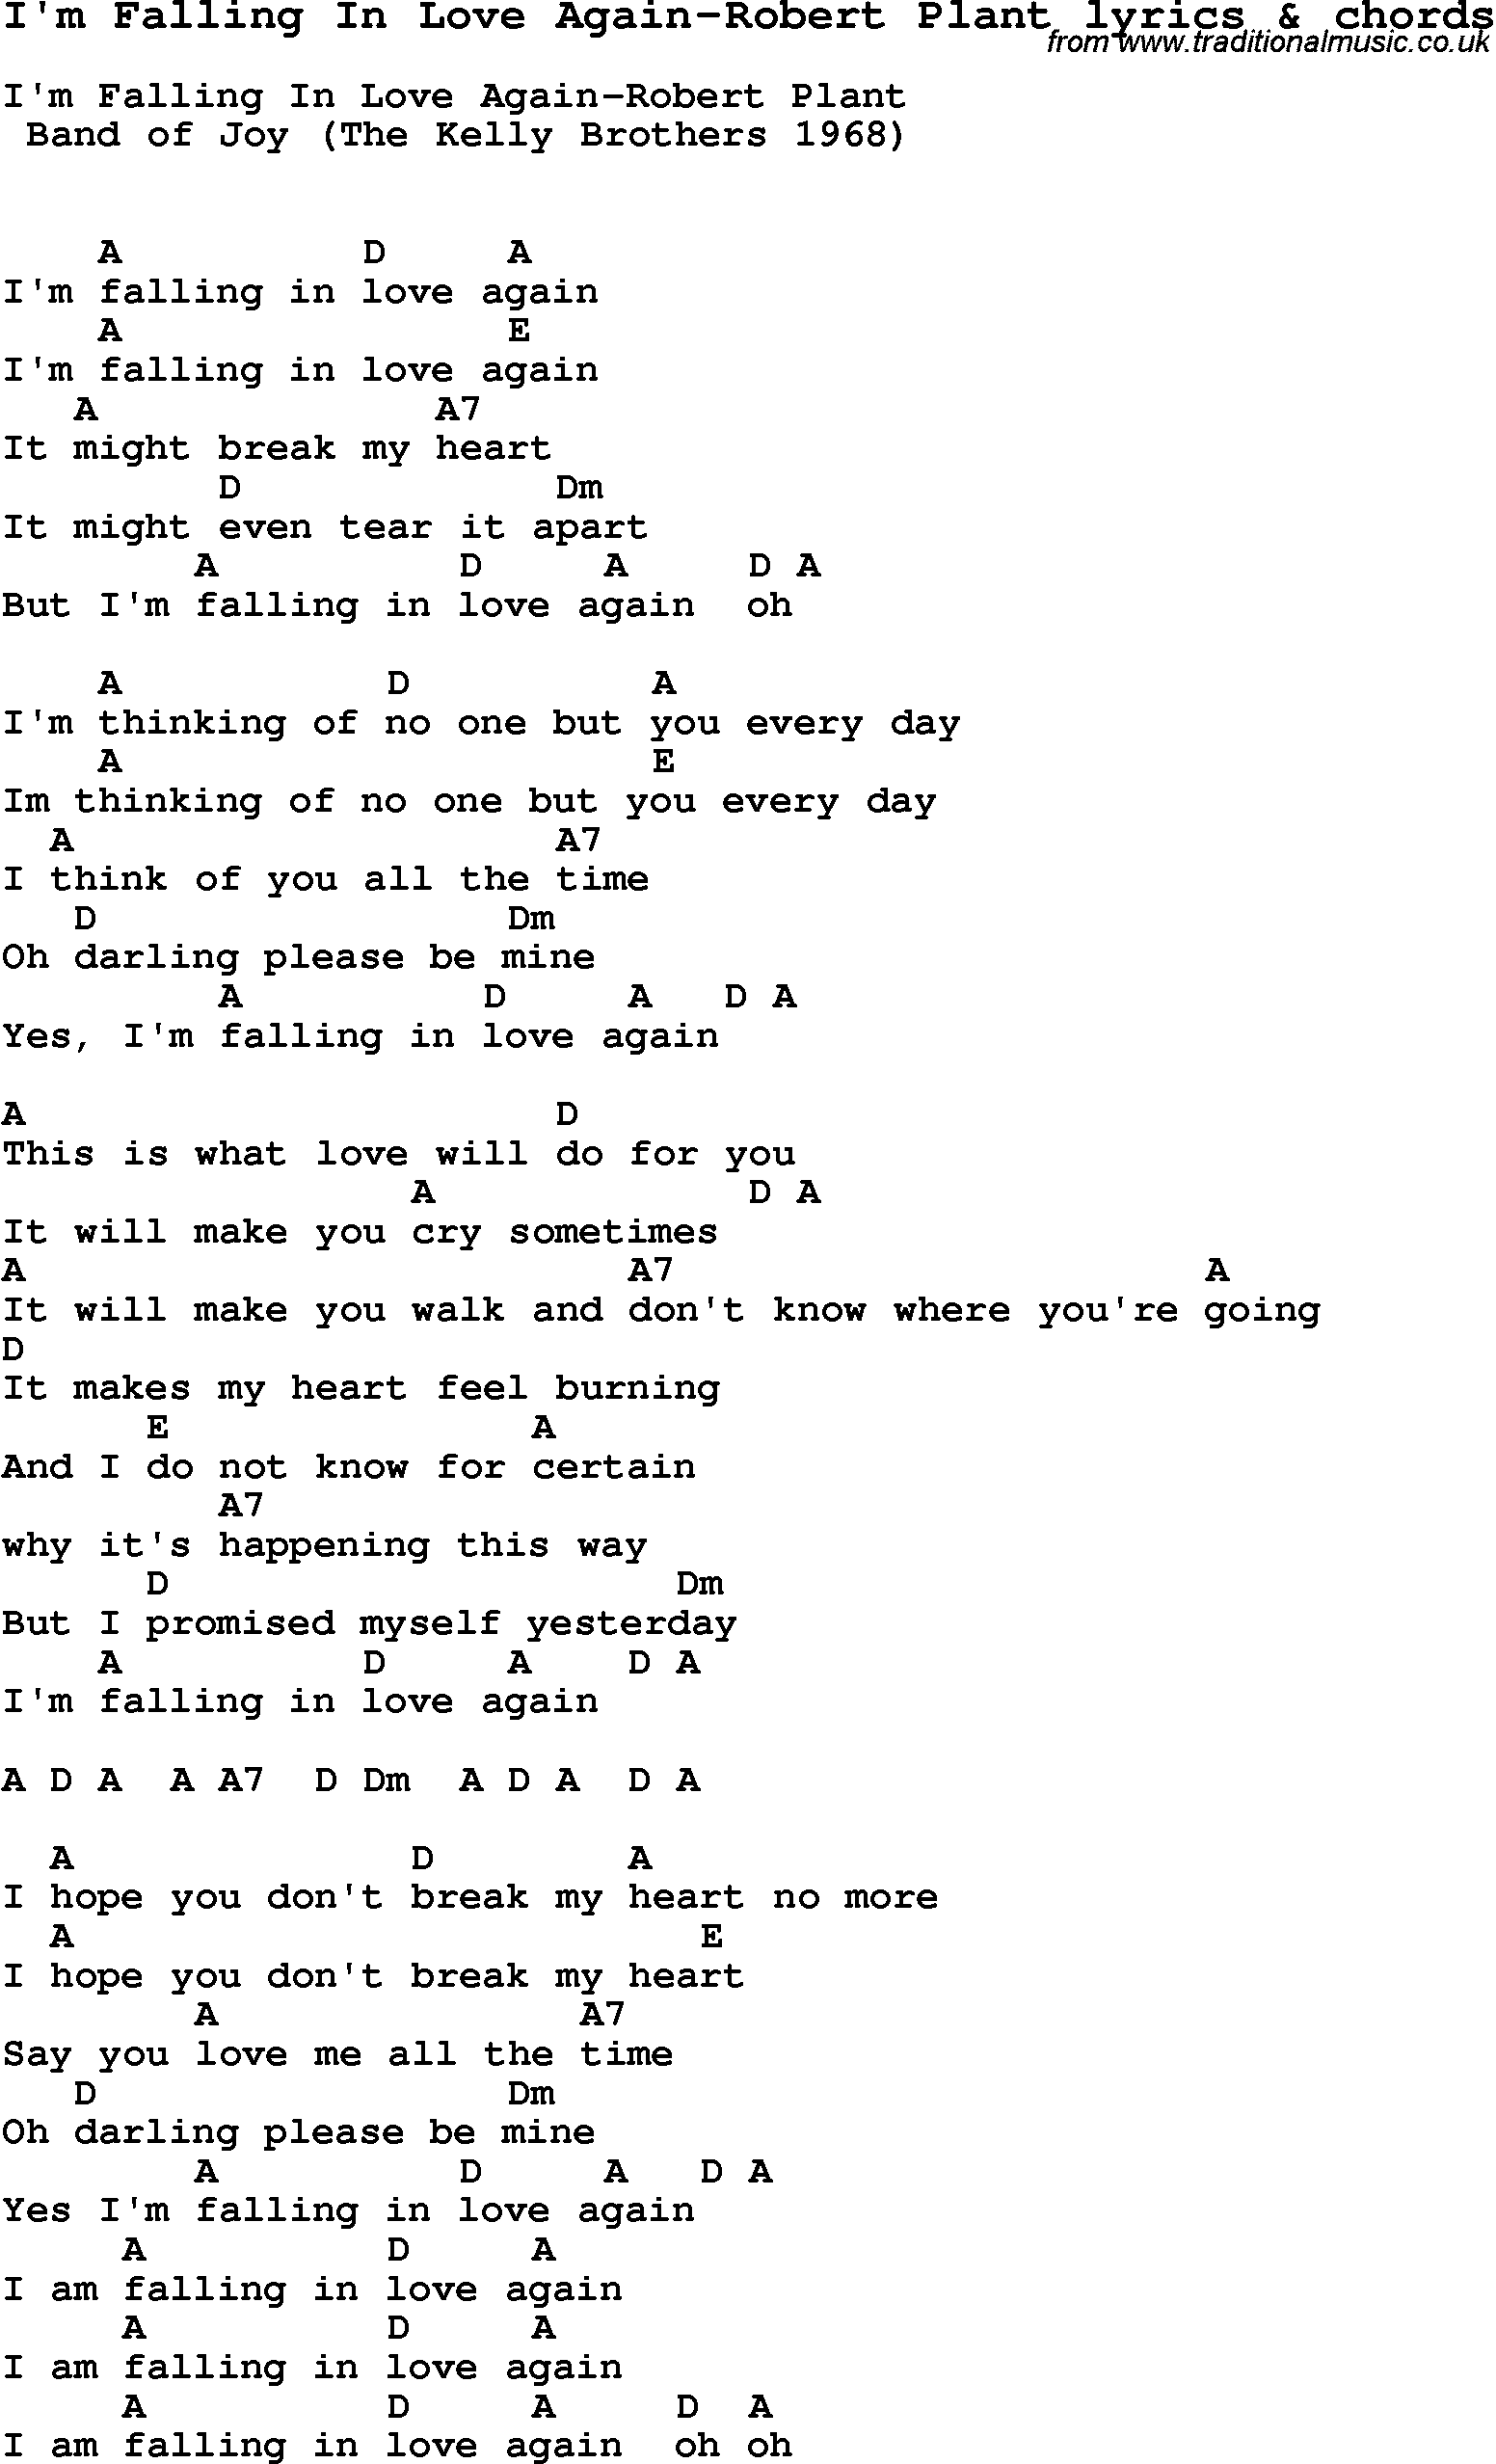 Love Song Lyrics for: I'm Falling In Love Again-Robert Plant with chords for Ukulele, Guitar Banjo etc.